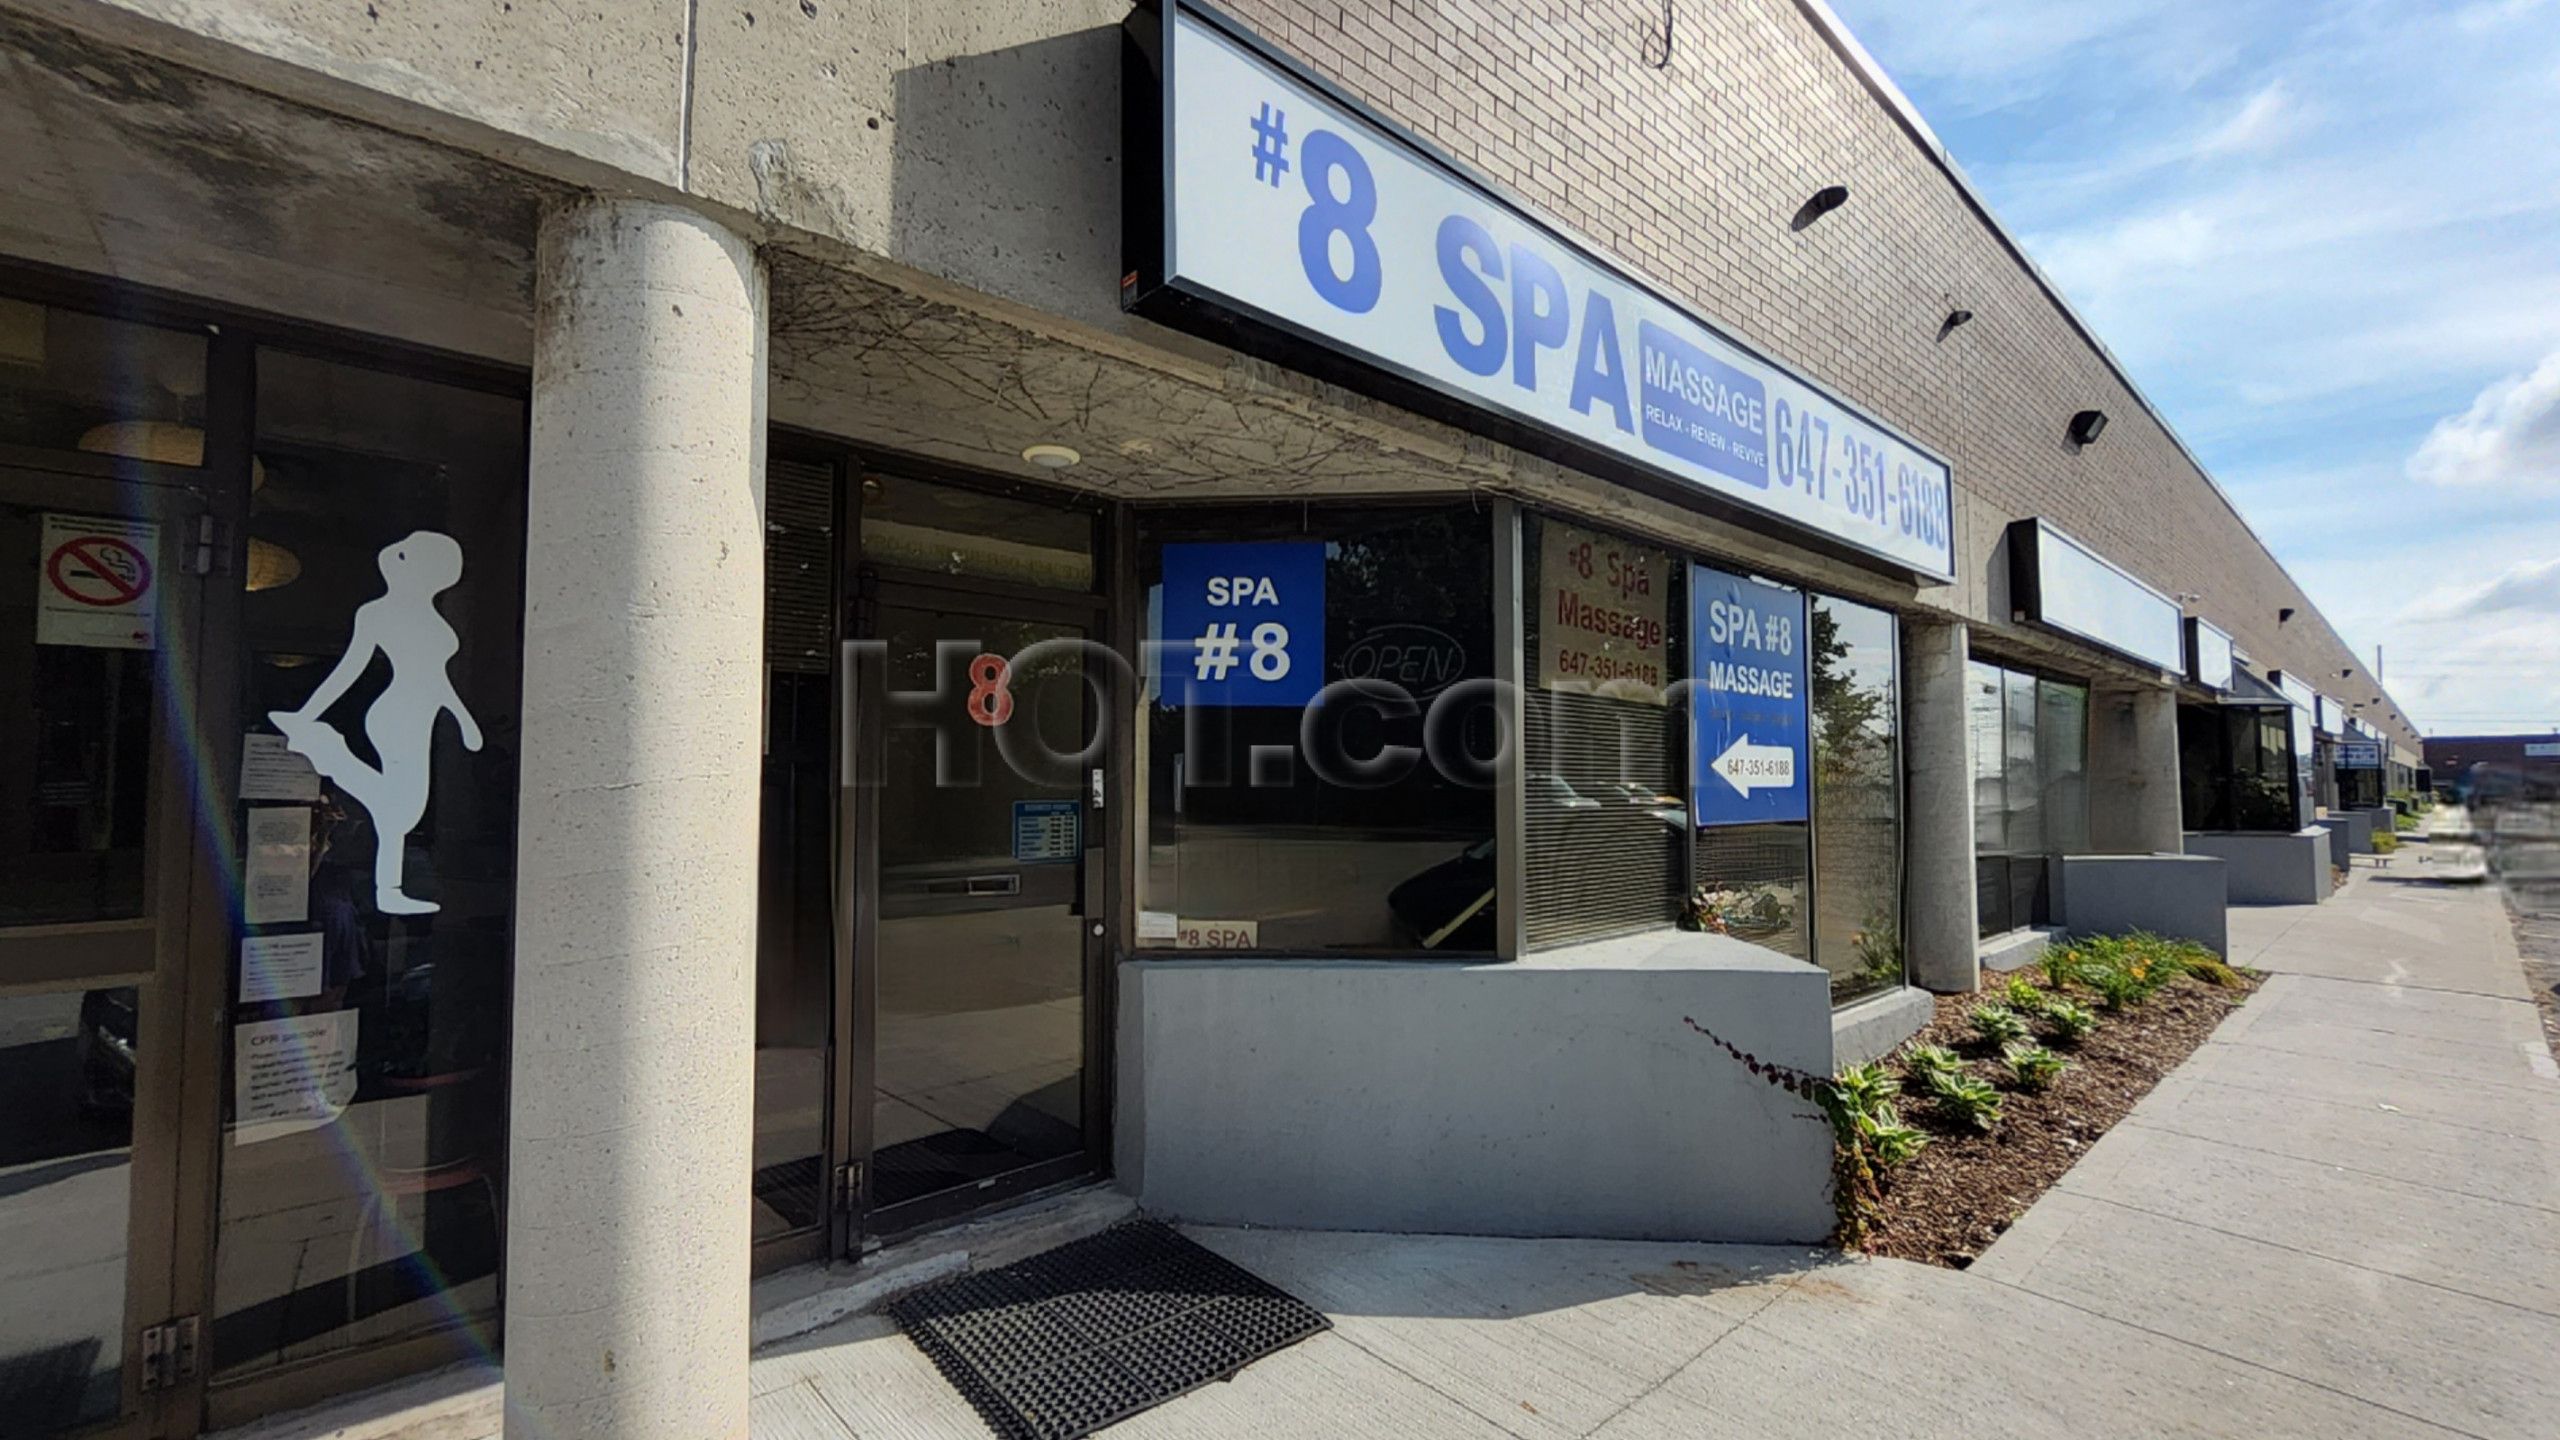 Toronto, Ontario #8 Massage Pro Clinique